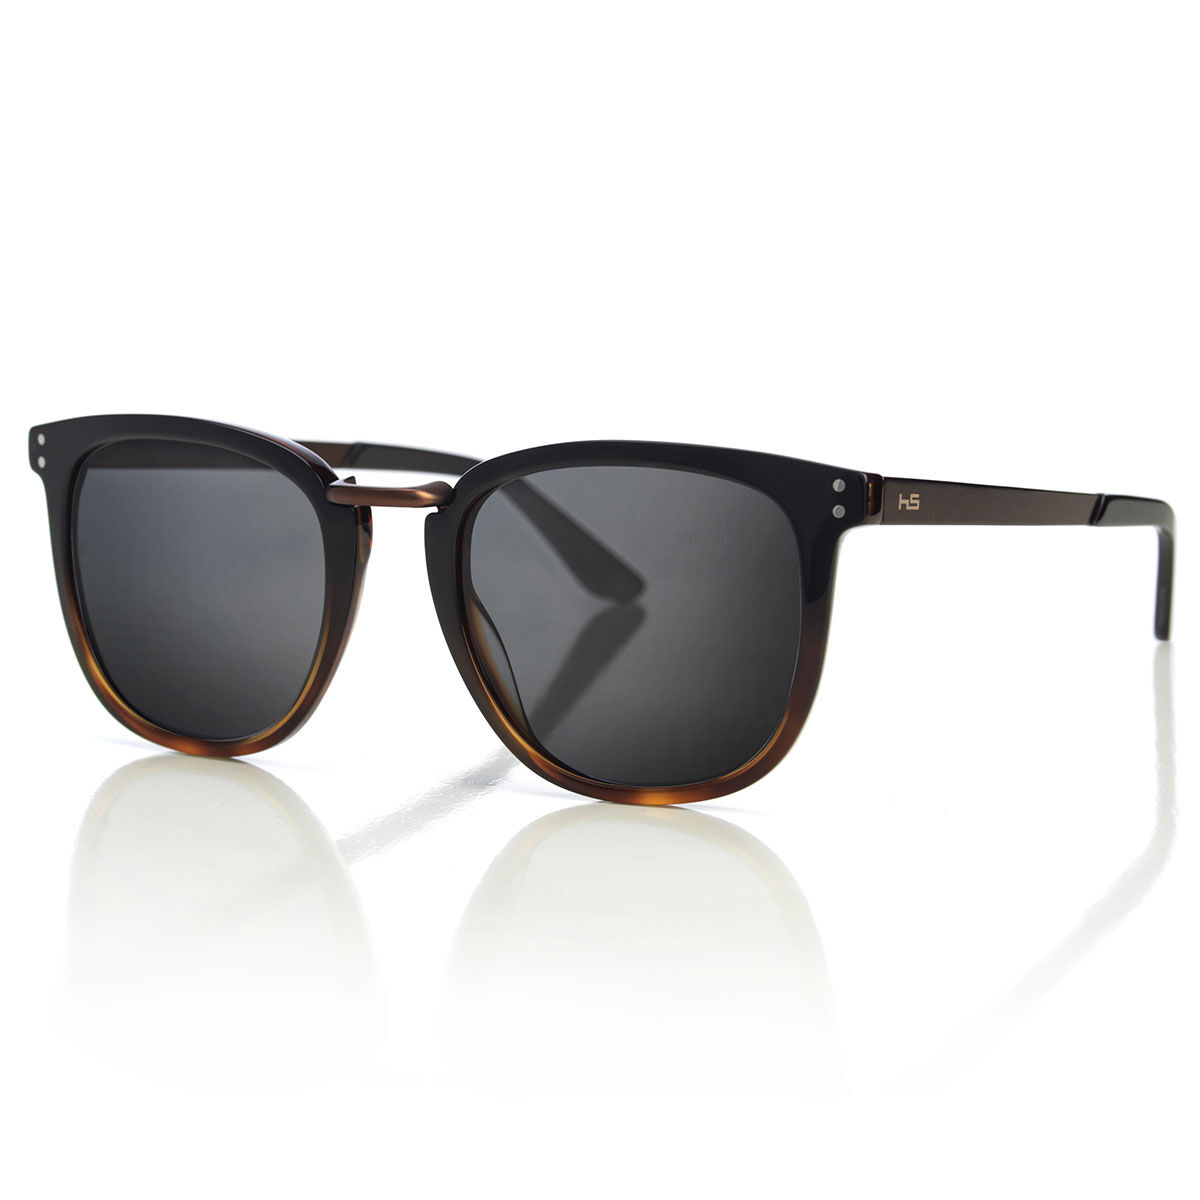 Golf Sunglasses - Sports Sunglasses Experts - SALE - Pretavoir